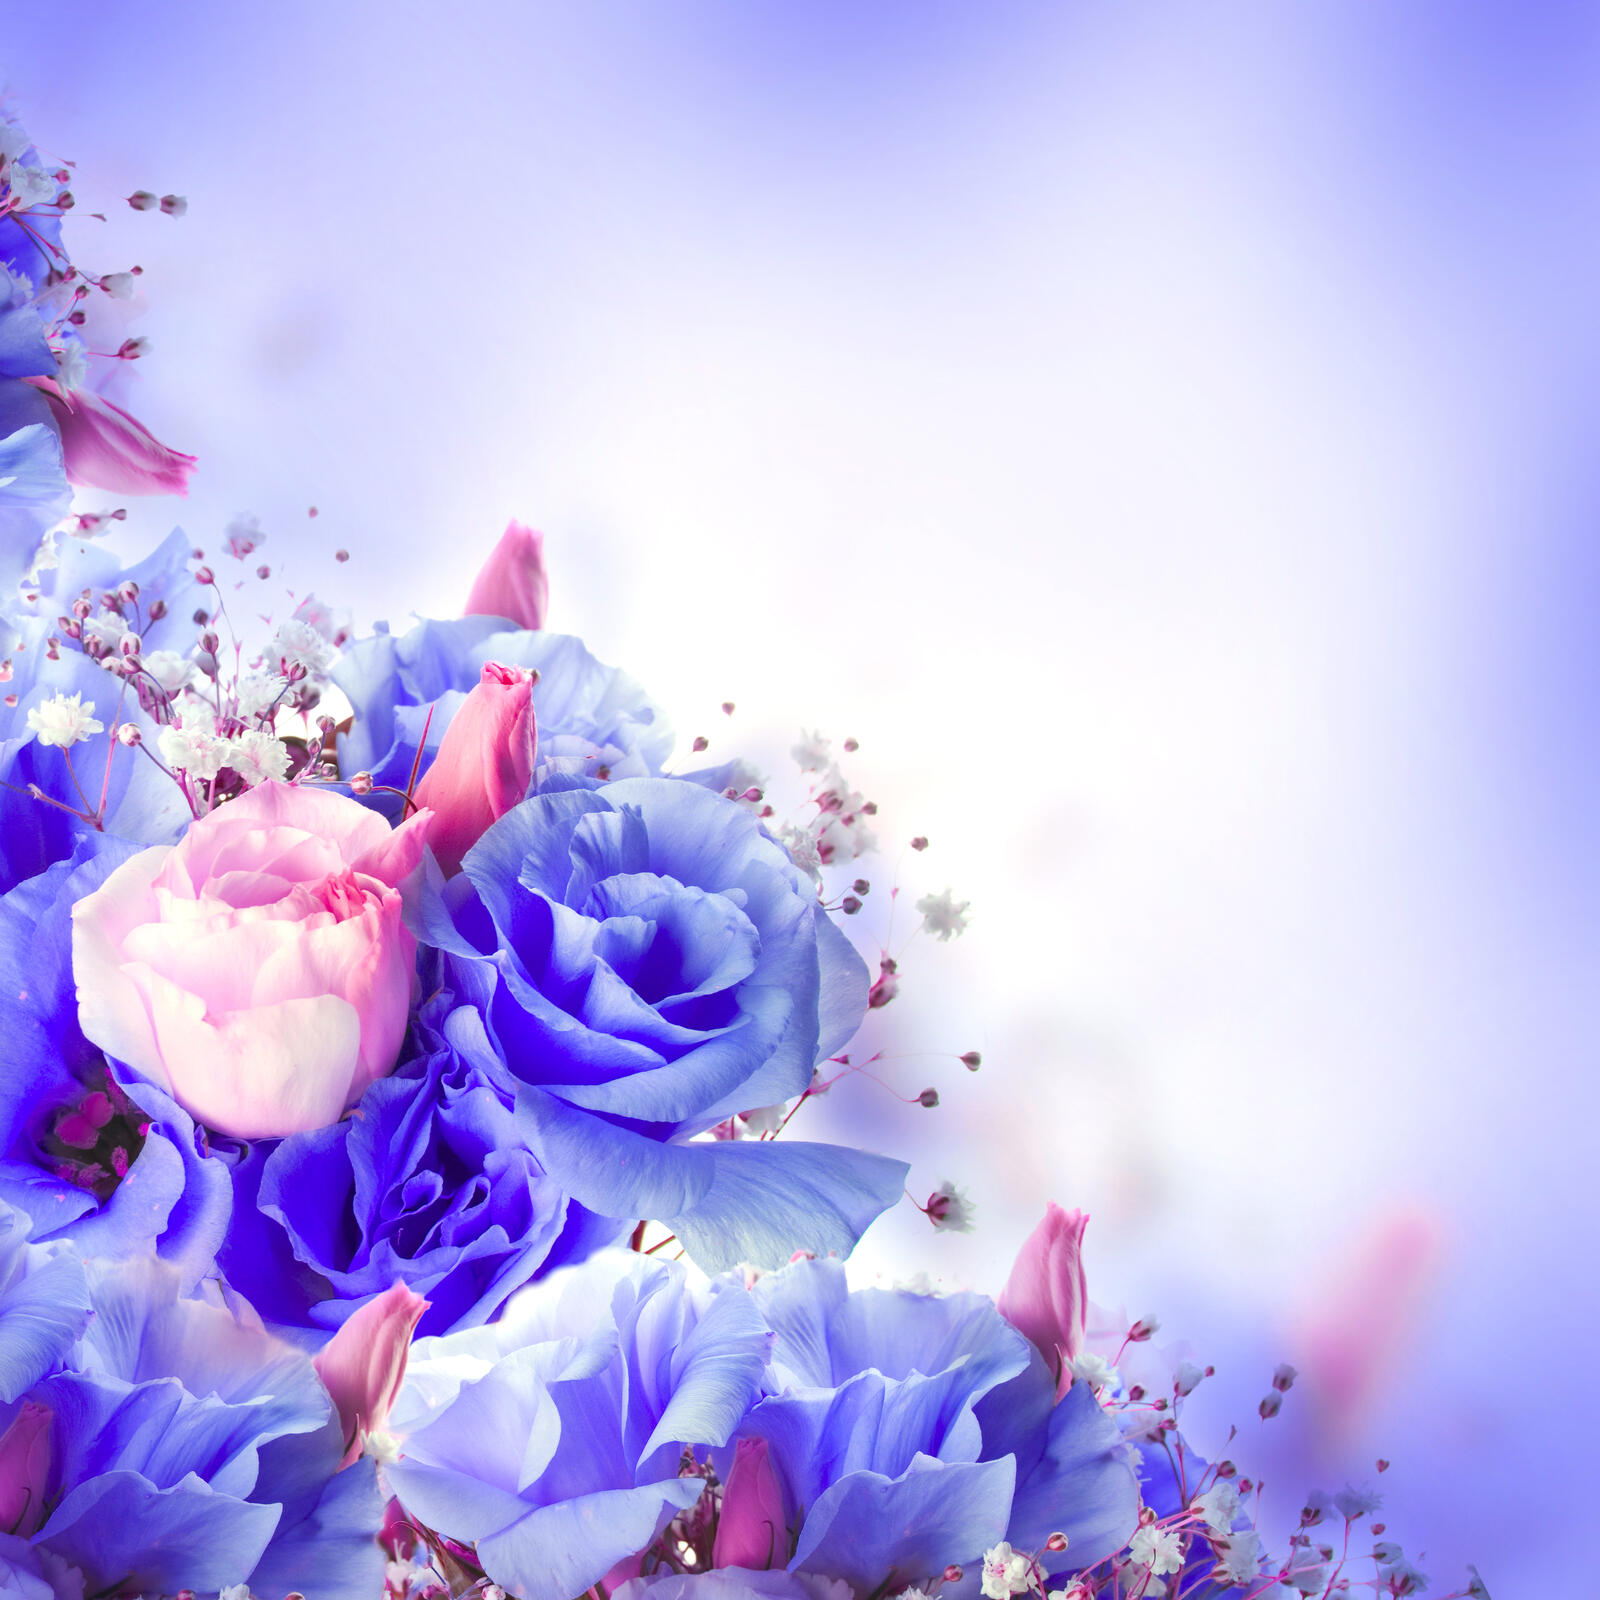 Бесплатное фото Картина с синими розами